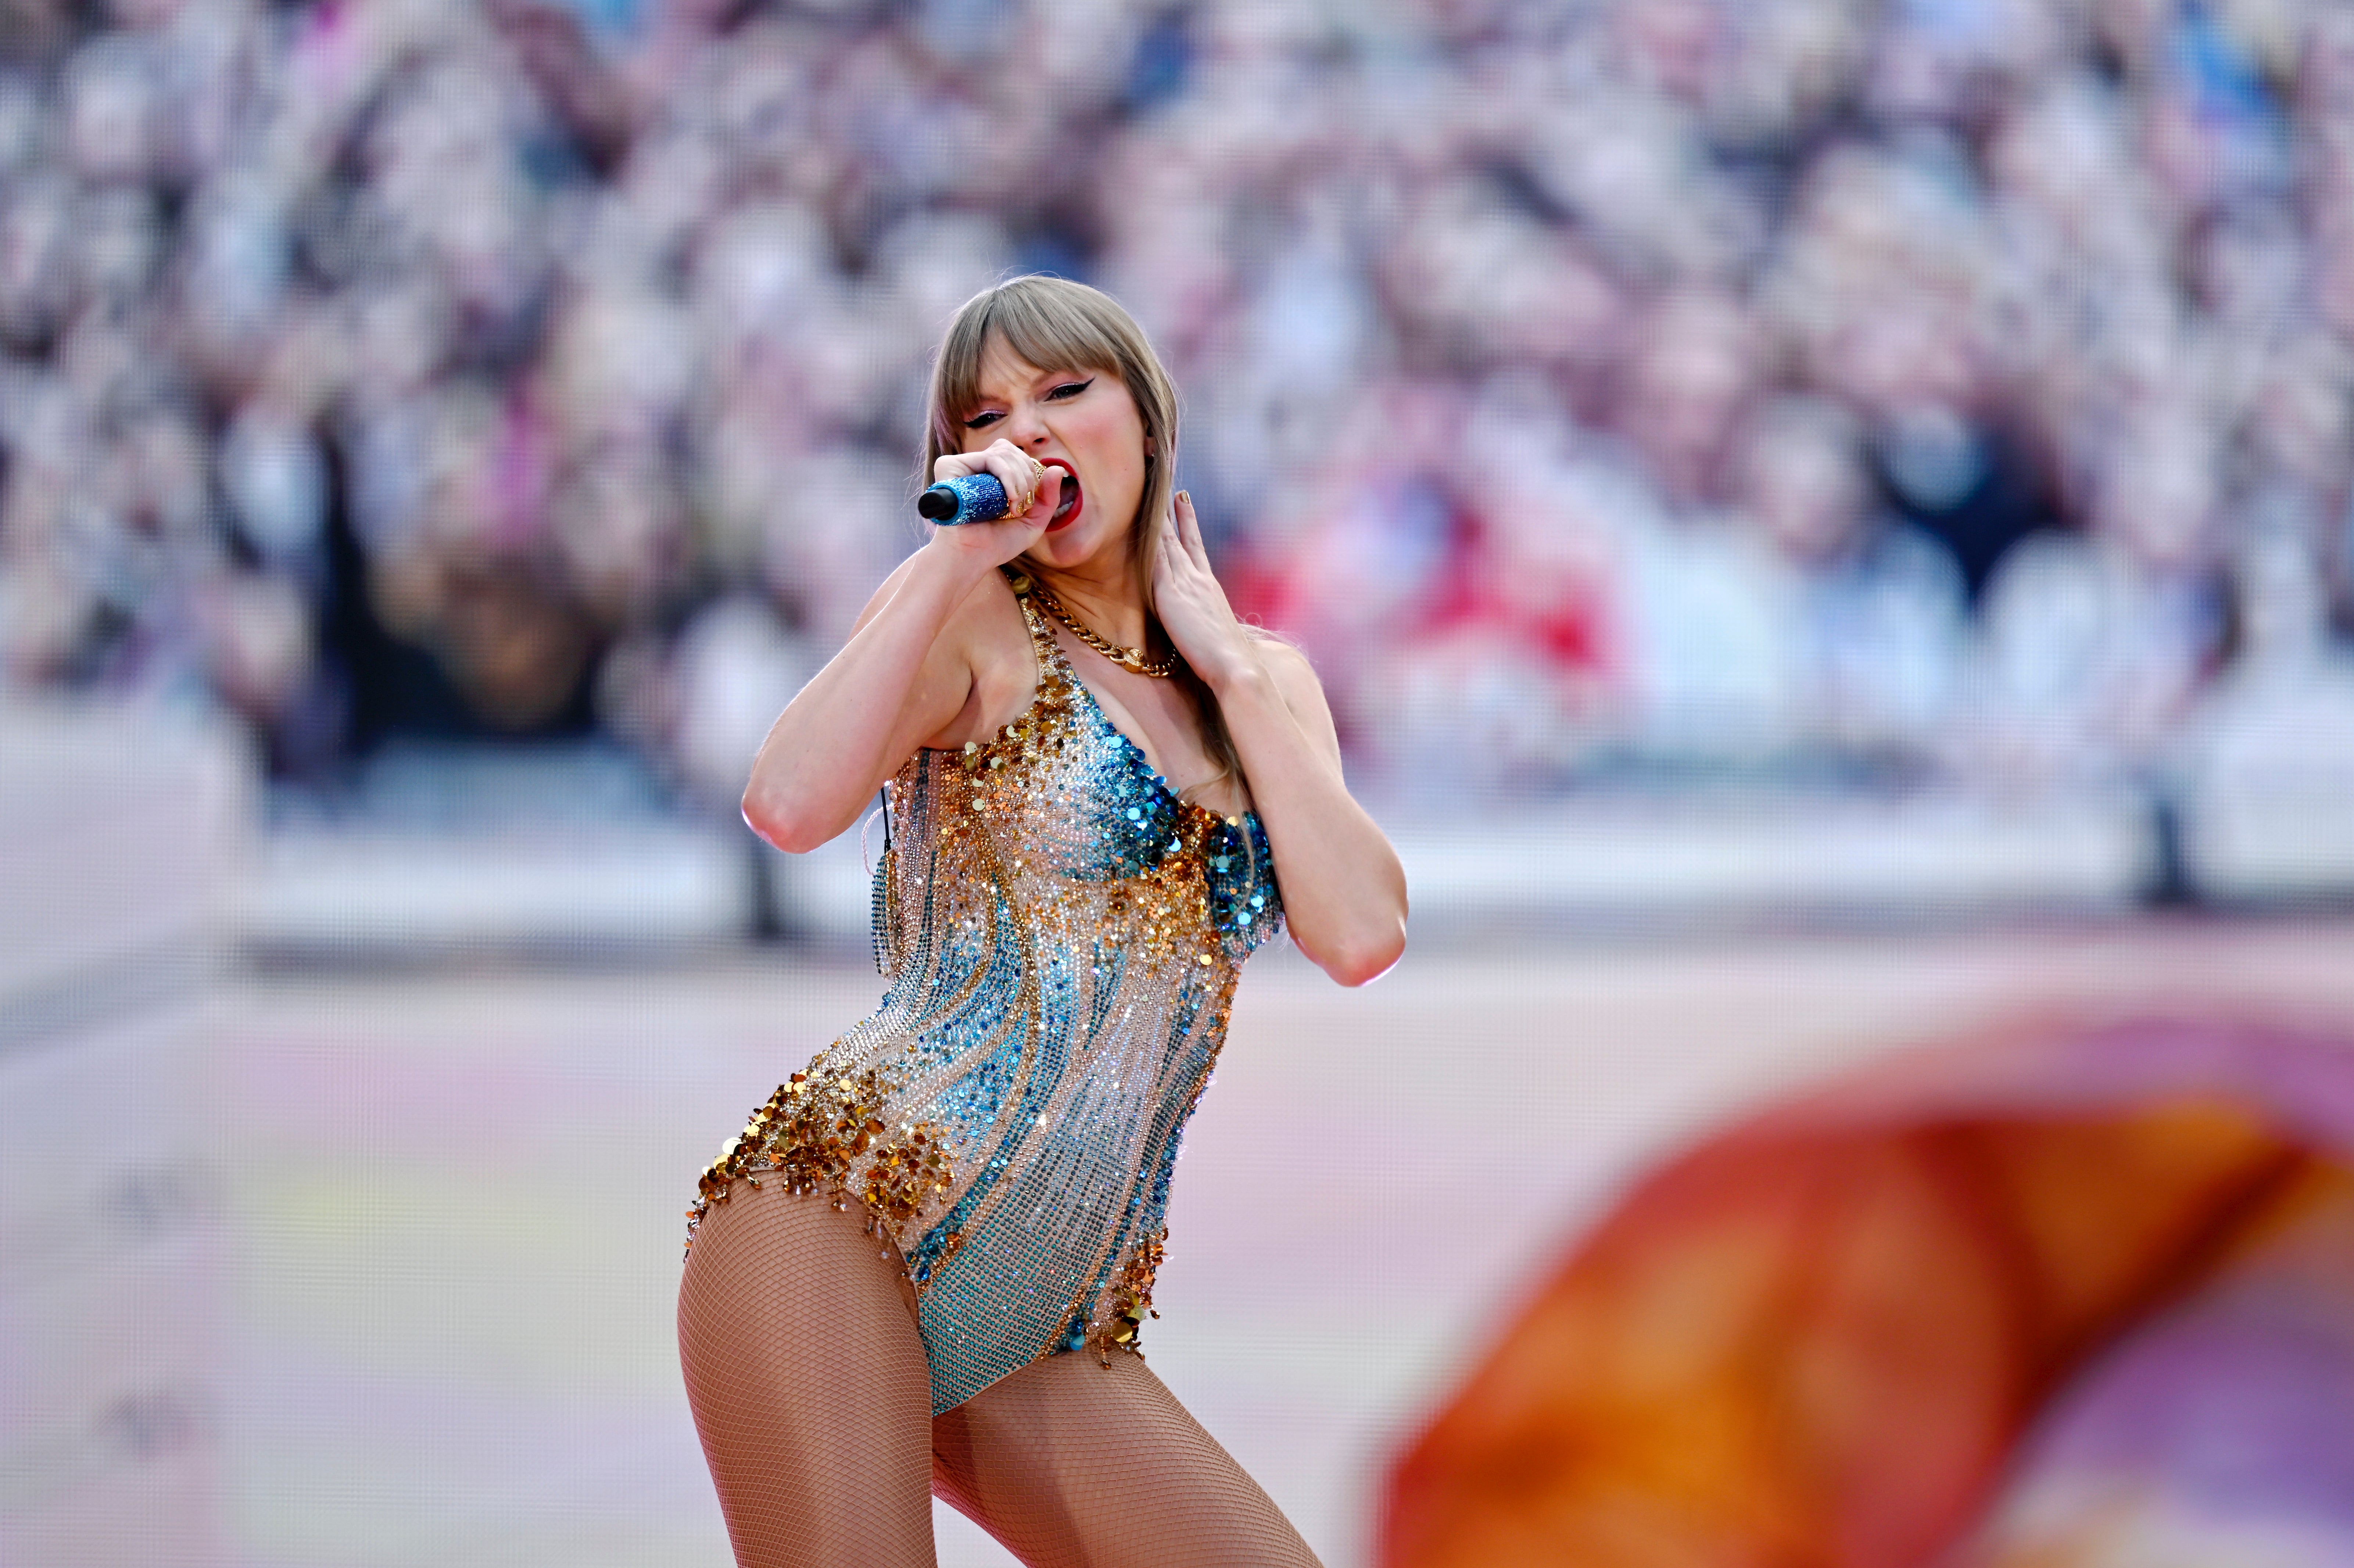 Swift performing at London's Wembley Stadium